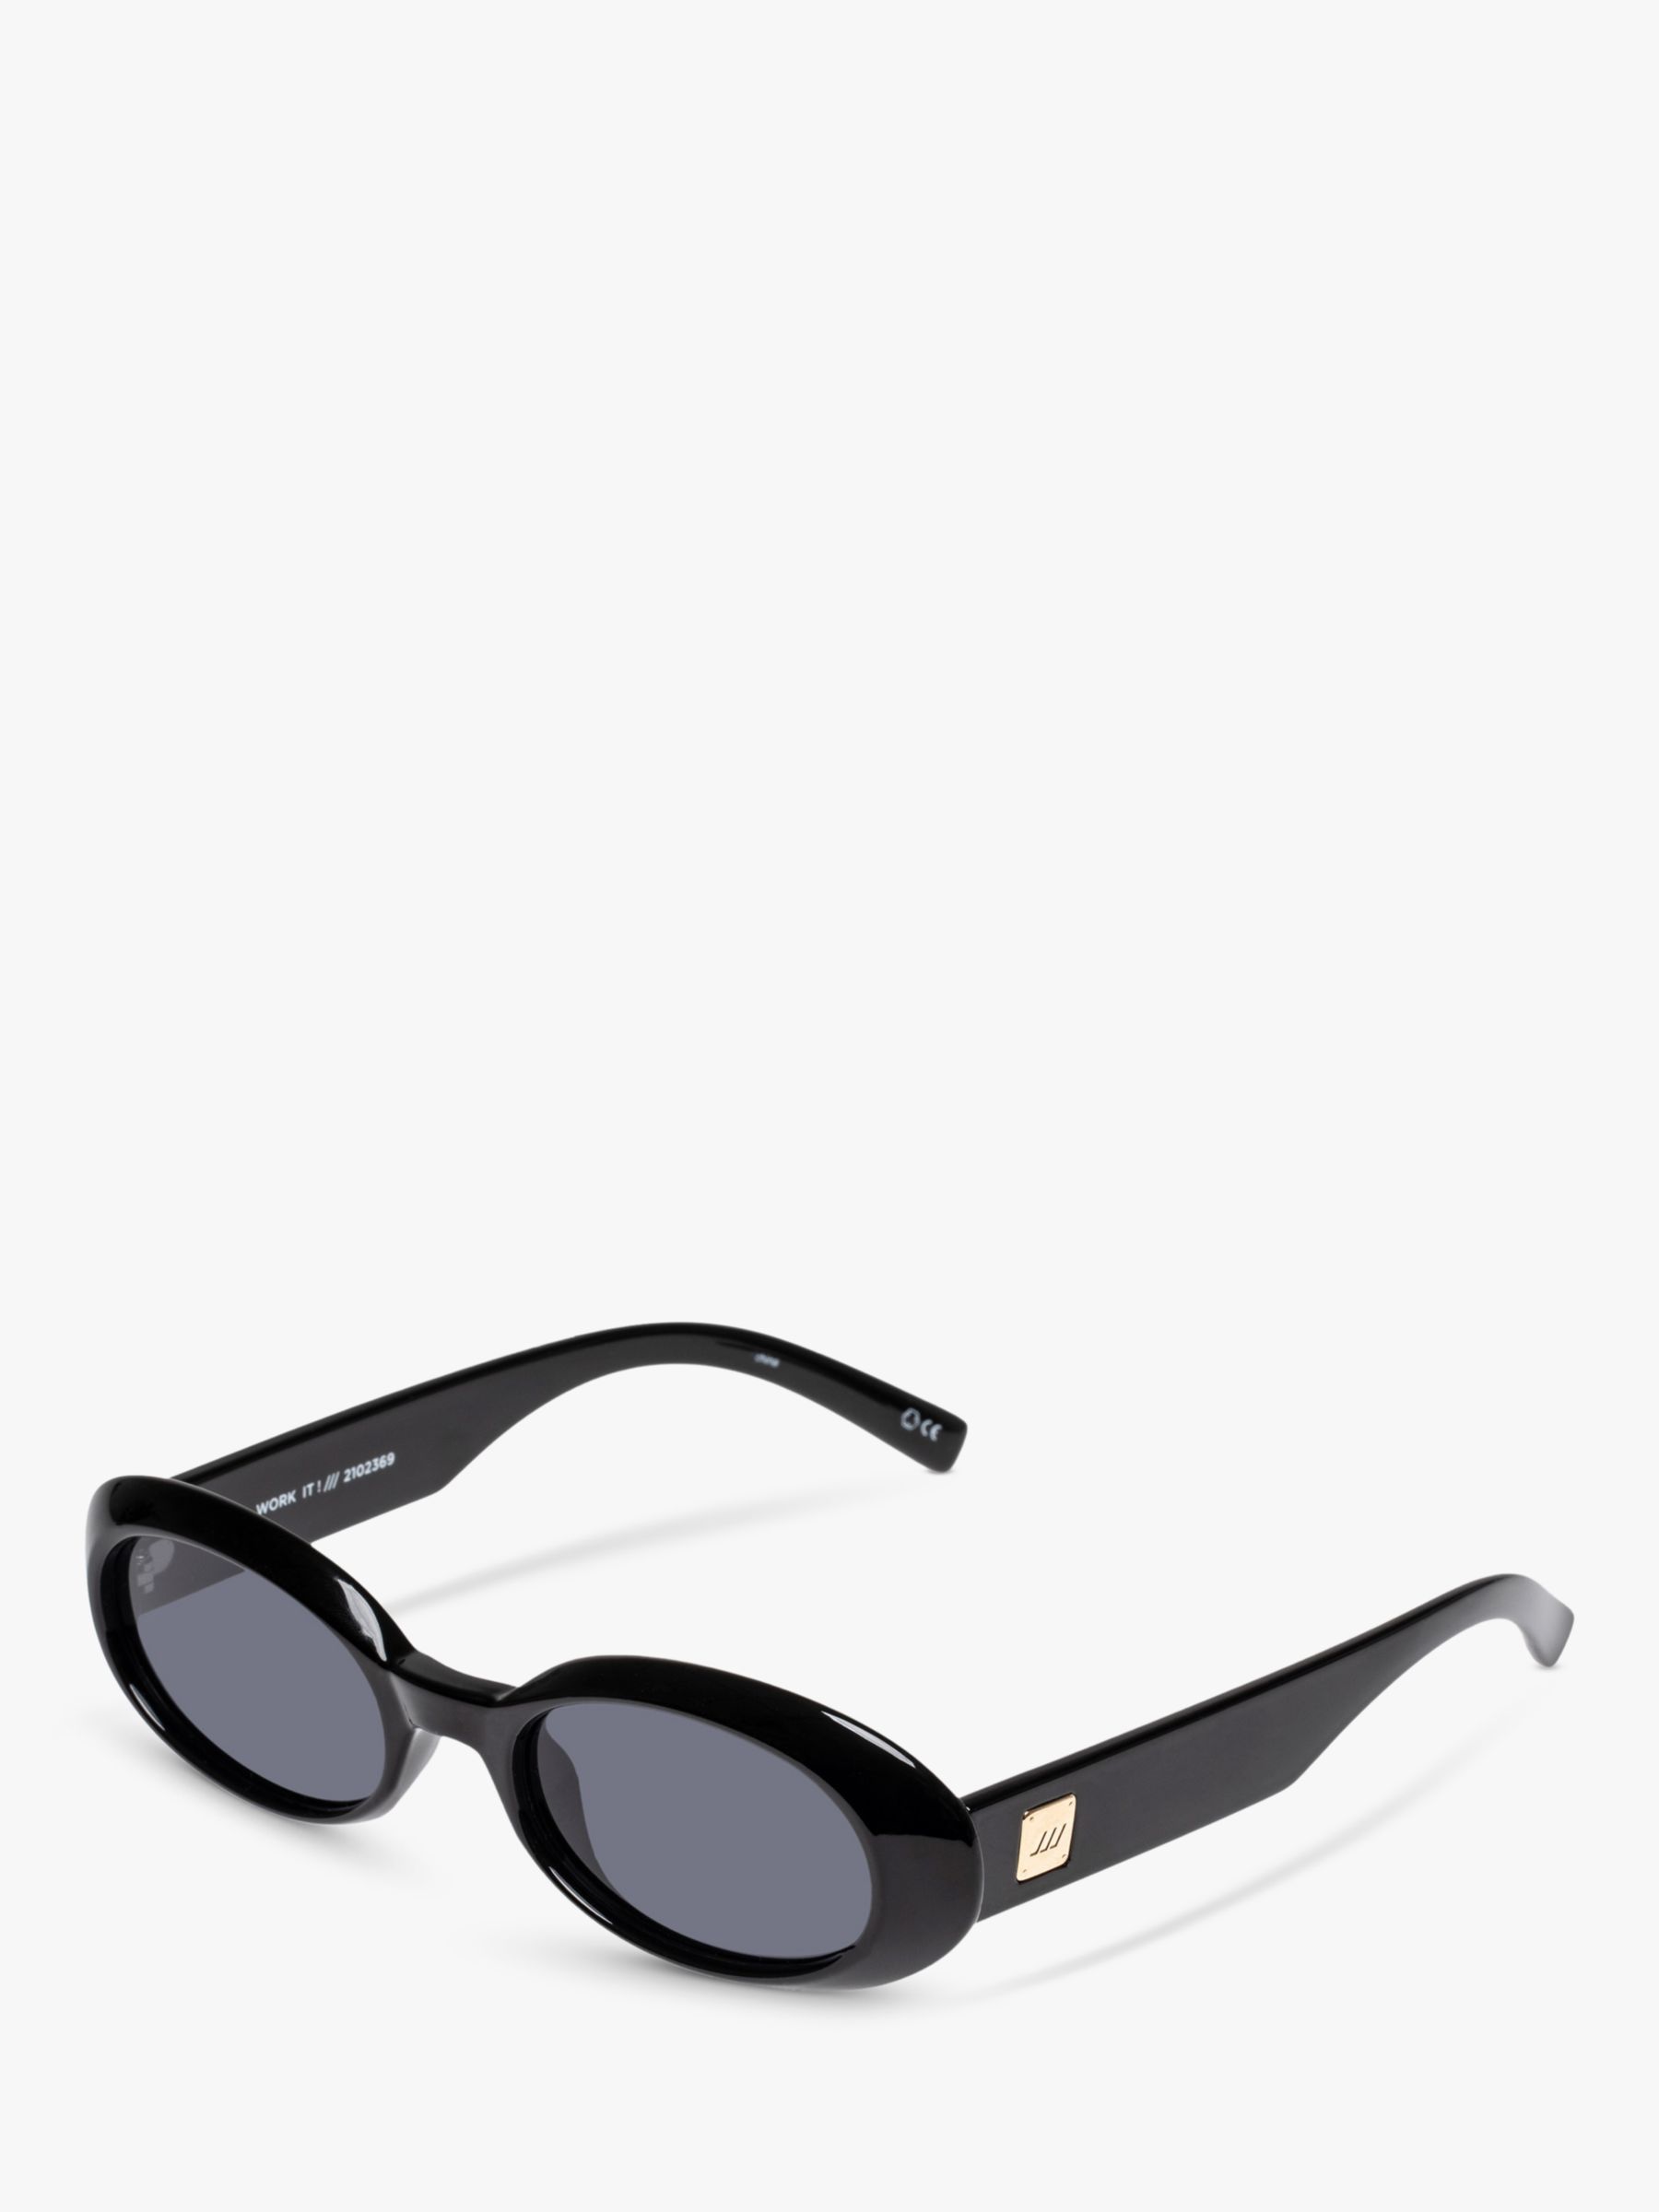 Le Specs L5000187 Women's Work It Oval Sunglasses, Black/Grey | John Lewis (UK)